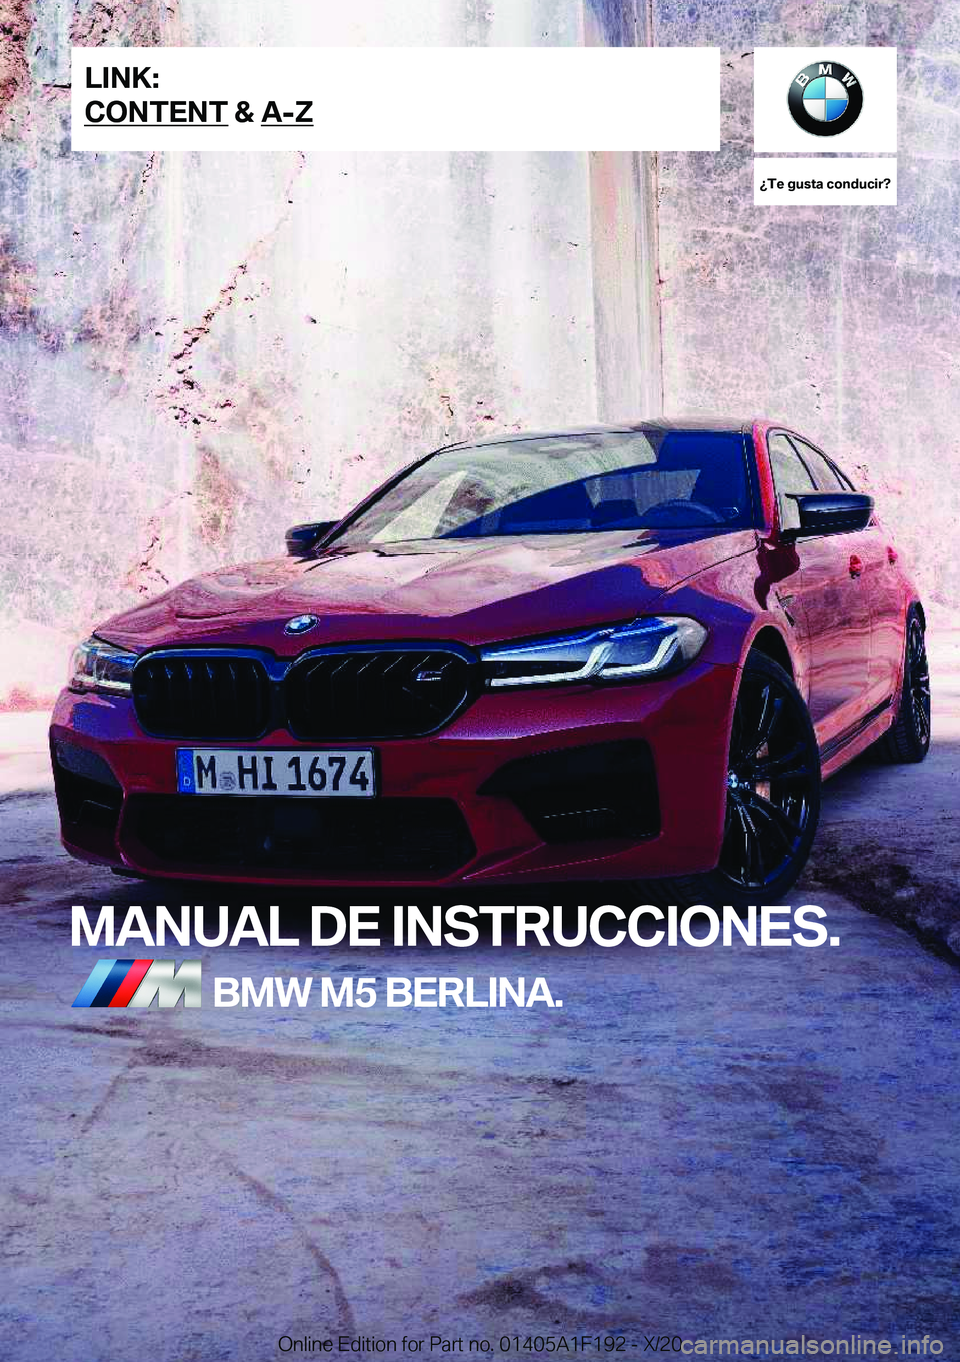 BMW M5 2021  Manuales de Empleo (in Spanish) ��T�e��g�u�s�t�a��c�o�n�d�u�c�i�r� 
�M�A�N�U�A�L��D�E��I�N�S�T�R�U�C�C�I�O�N�E�S�.�B�M�W��M�5��B�E�R�L�I�N�A�.�L�I�N�K�:
�C�O�N�T�E�N�T��&��A�-�Z�O�n�l�i�n�e��E�d�i�t�i�o�n��f�o�r��P�a�r�t